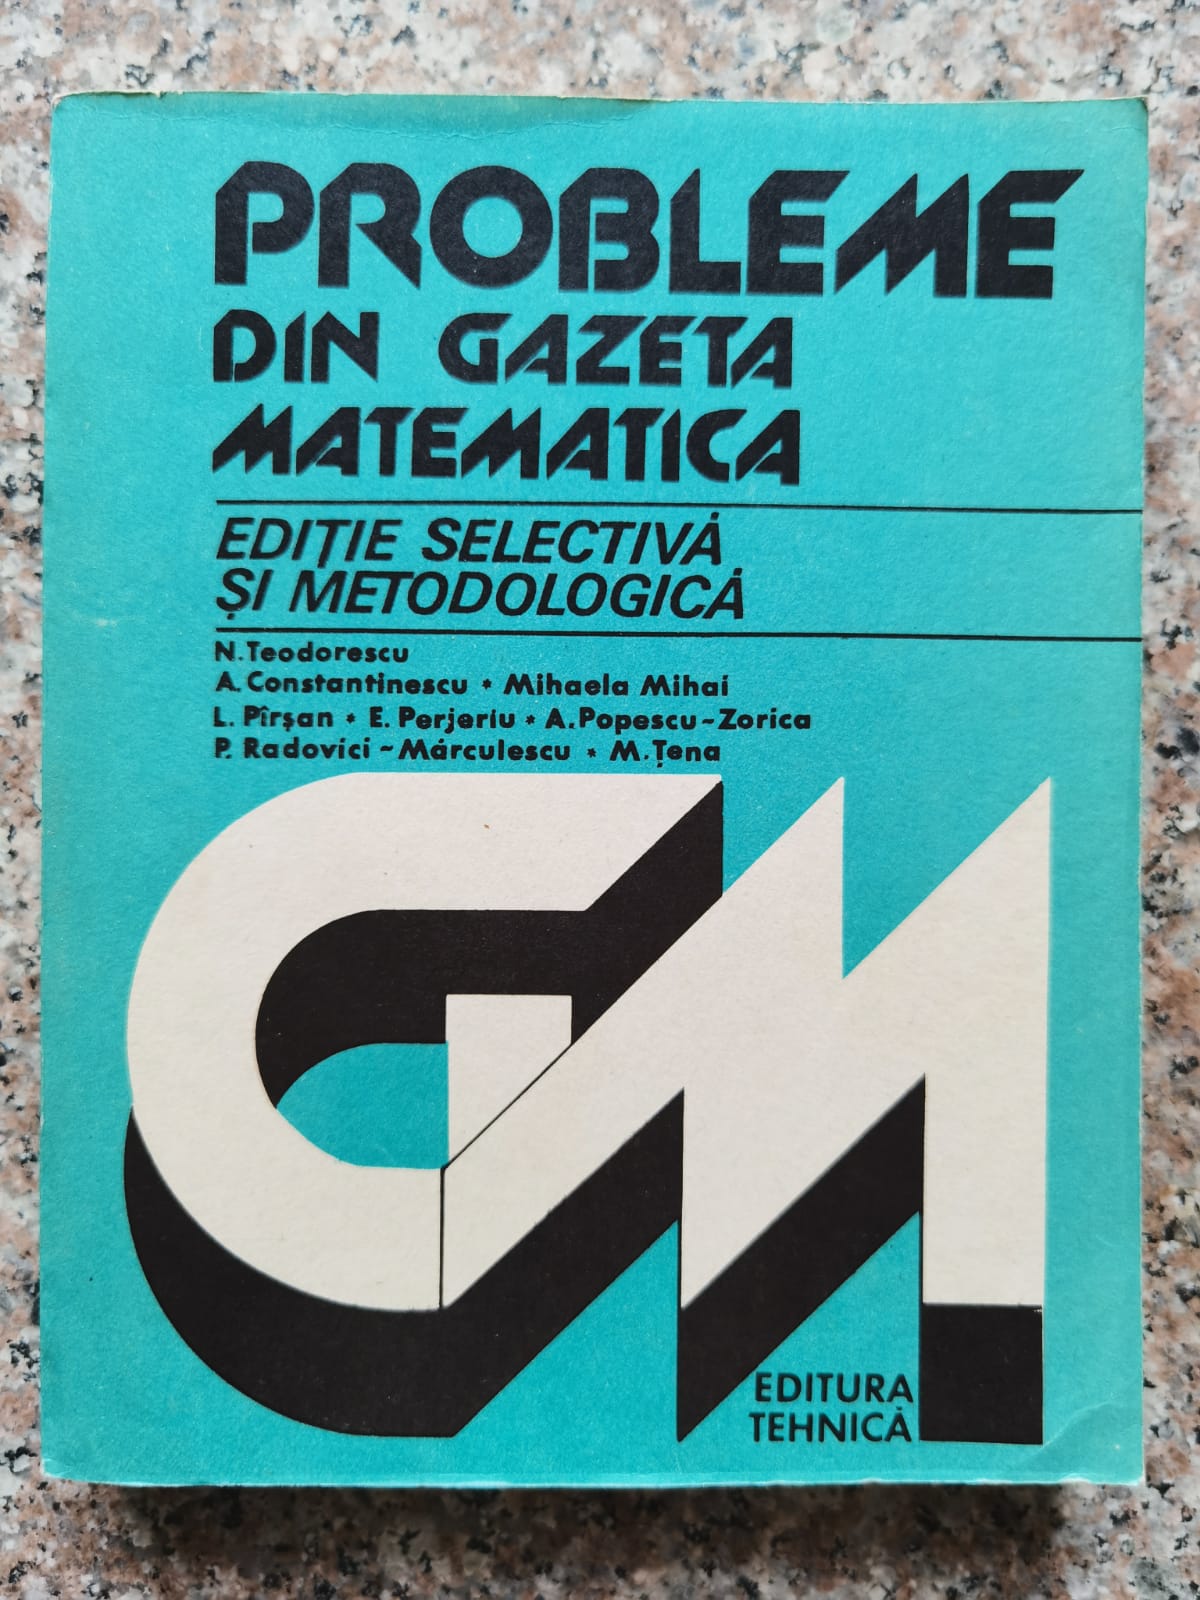 probleme din gazeta matematica – editie selectiva si metodologica                                    nicolae teodorescu, alexandru constantinescu, mihaela mihai                                         